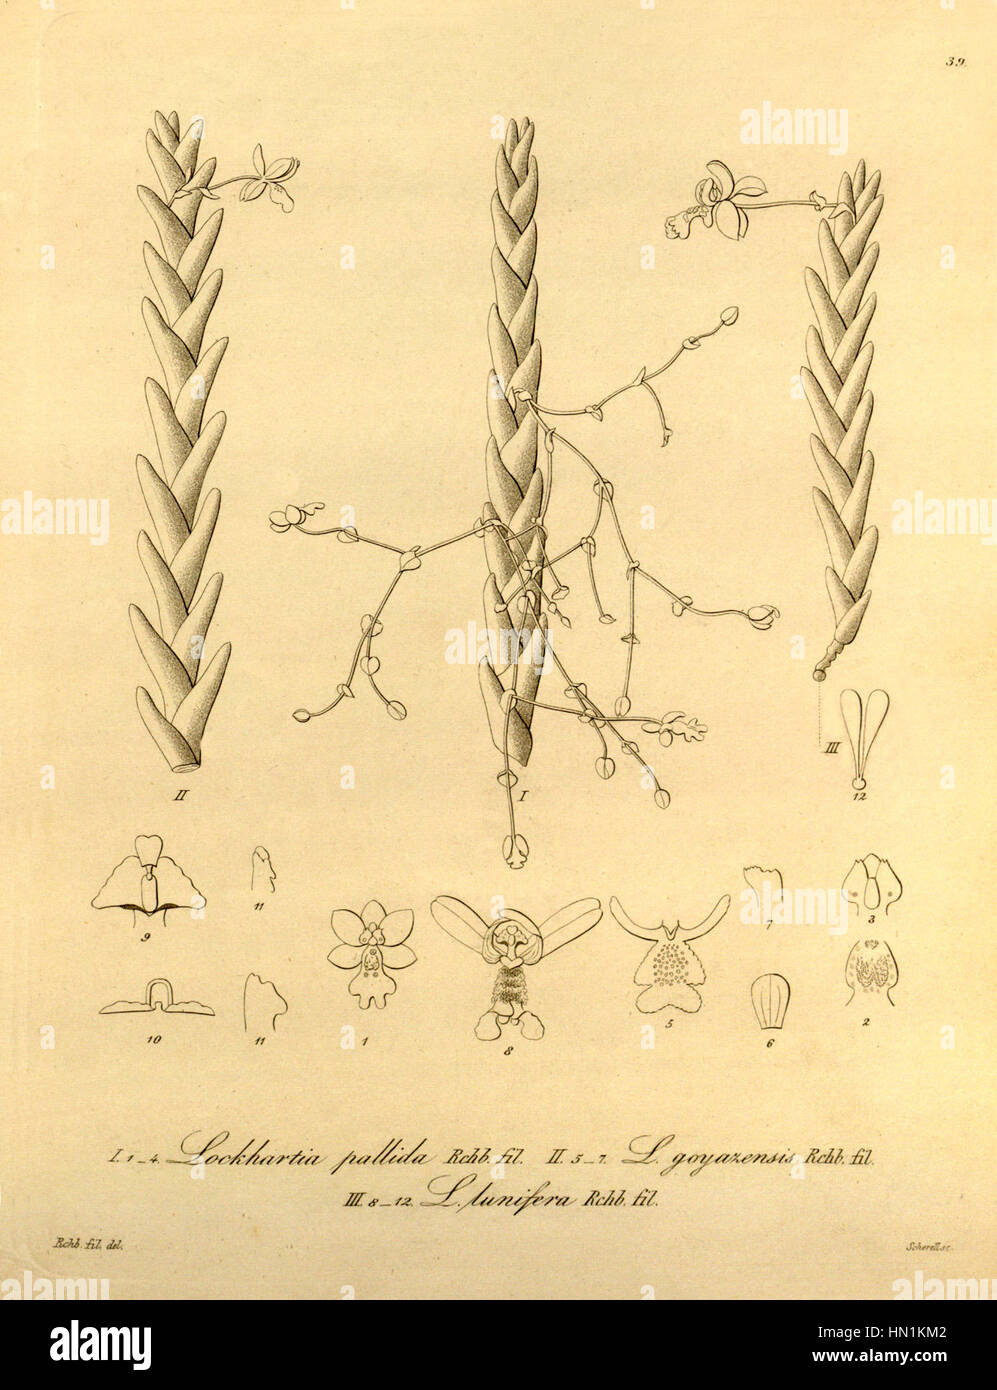 Lockhartia acuta (as Lockhartia pallida) - Lockhartia goyazensis - Lockhartia lunifera - Xenia vol 1 pl 39 (1858) Stock Photo